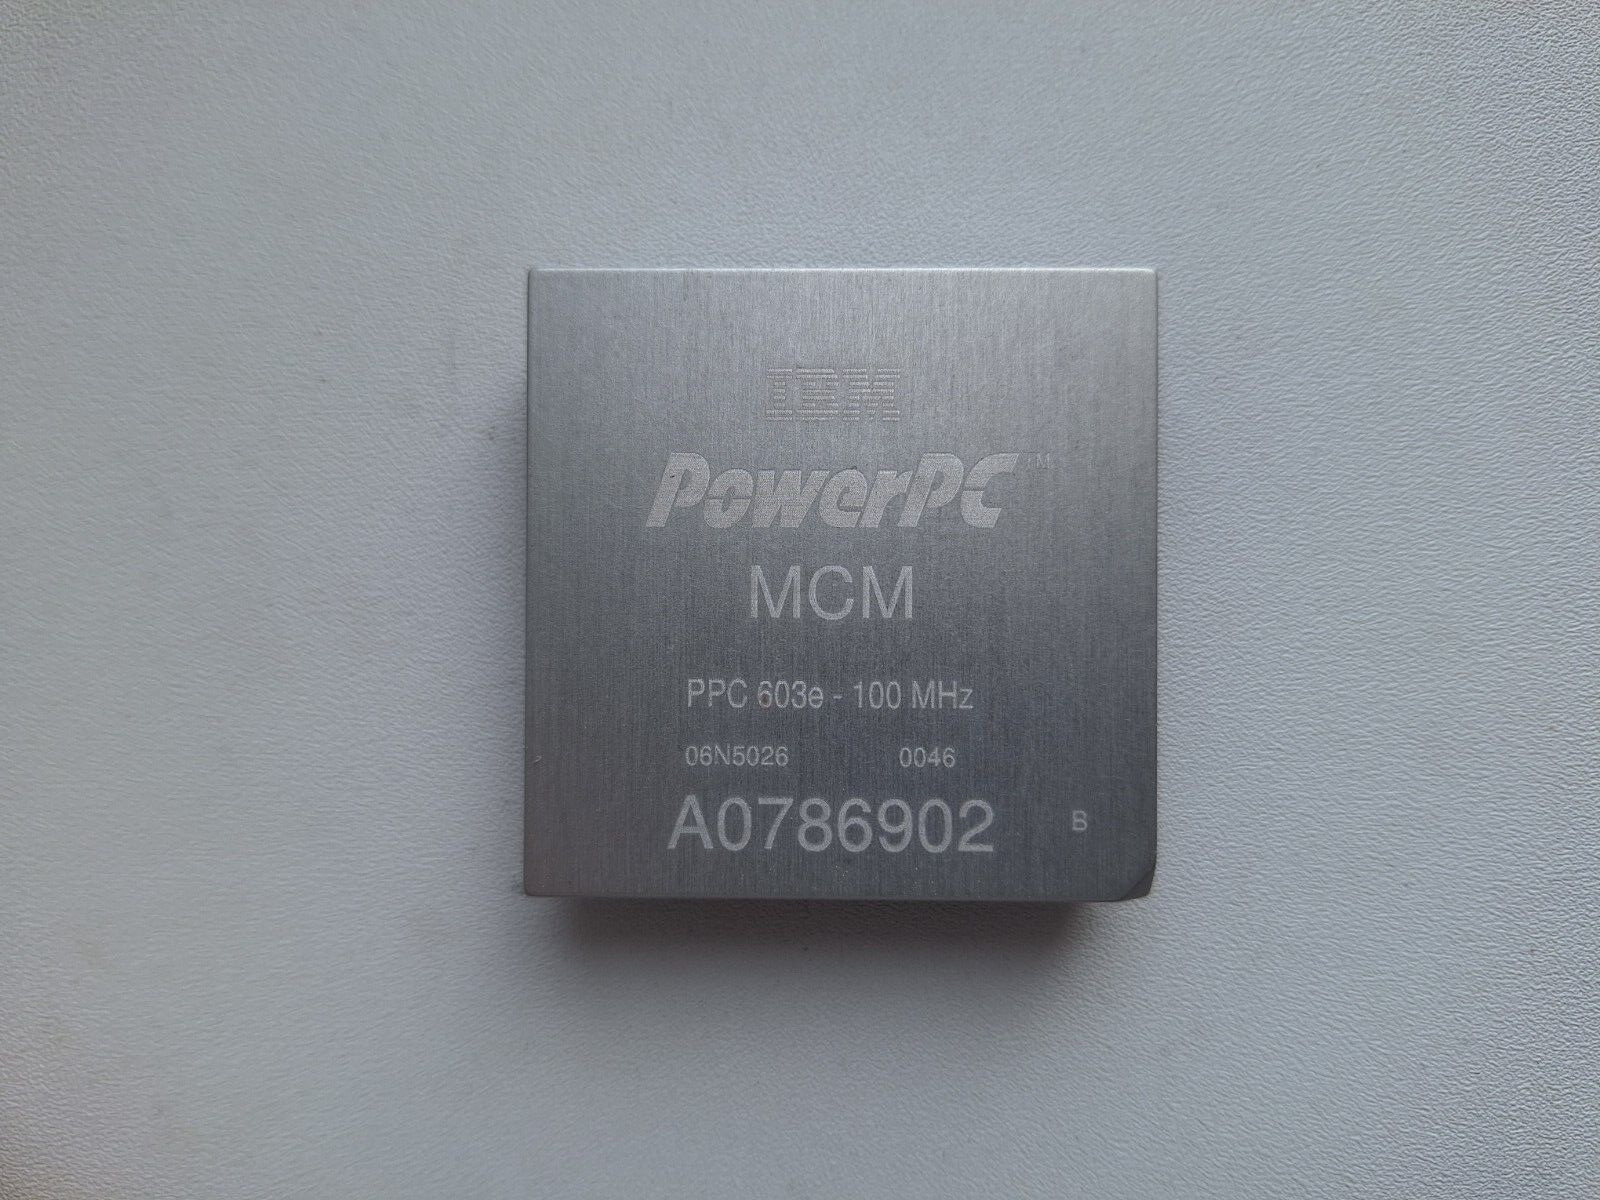 IBM PowerPC MCM PPC603e-100MHz 06N5026 100MHz very rare vintage CPU GOLD